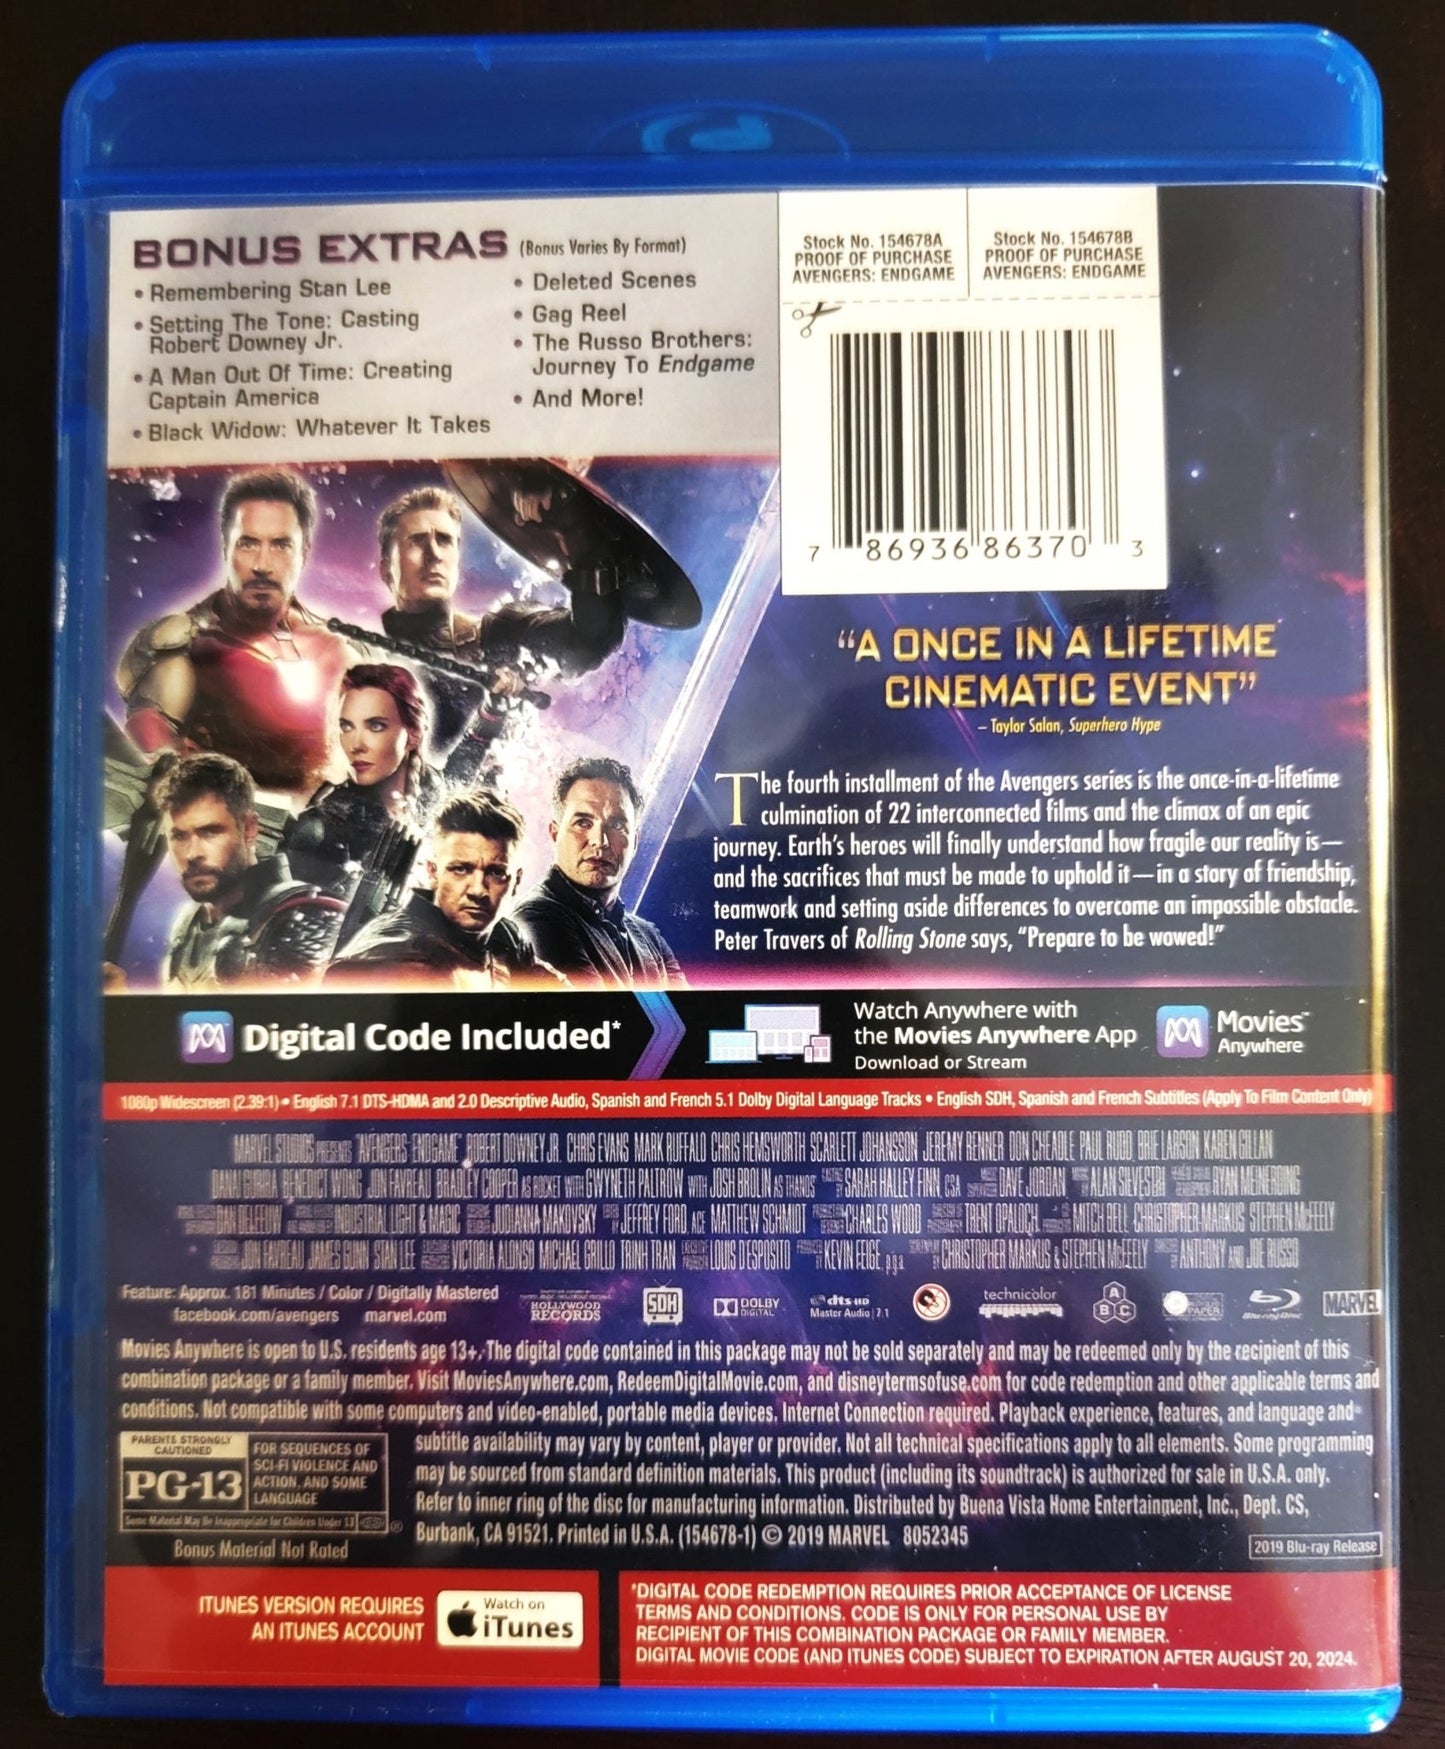 Marvel Studio - Avengers Endgame | DVD | Multi-Screen Edition - No Digital Copy - Blu-ray - Steady Bunny Shop